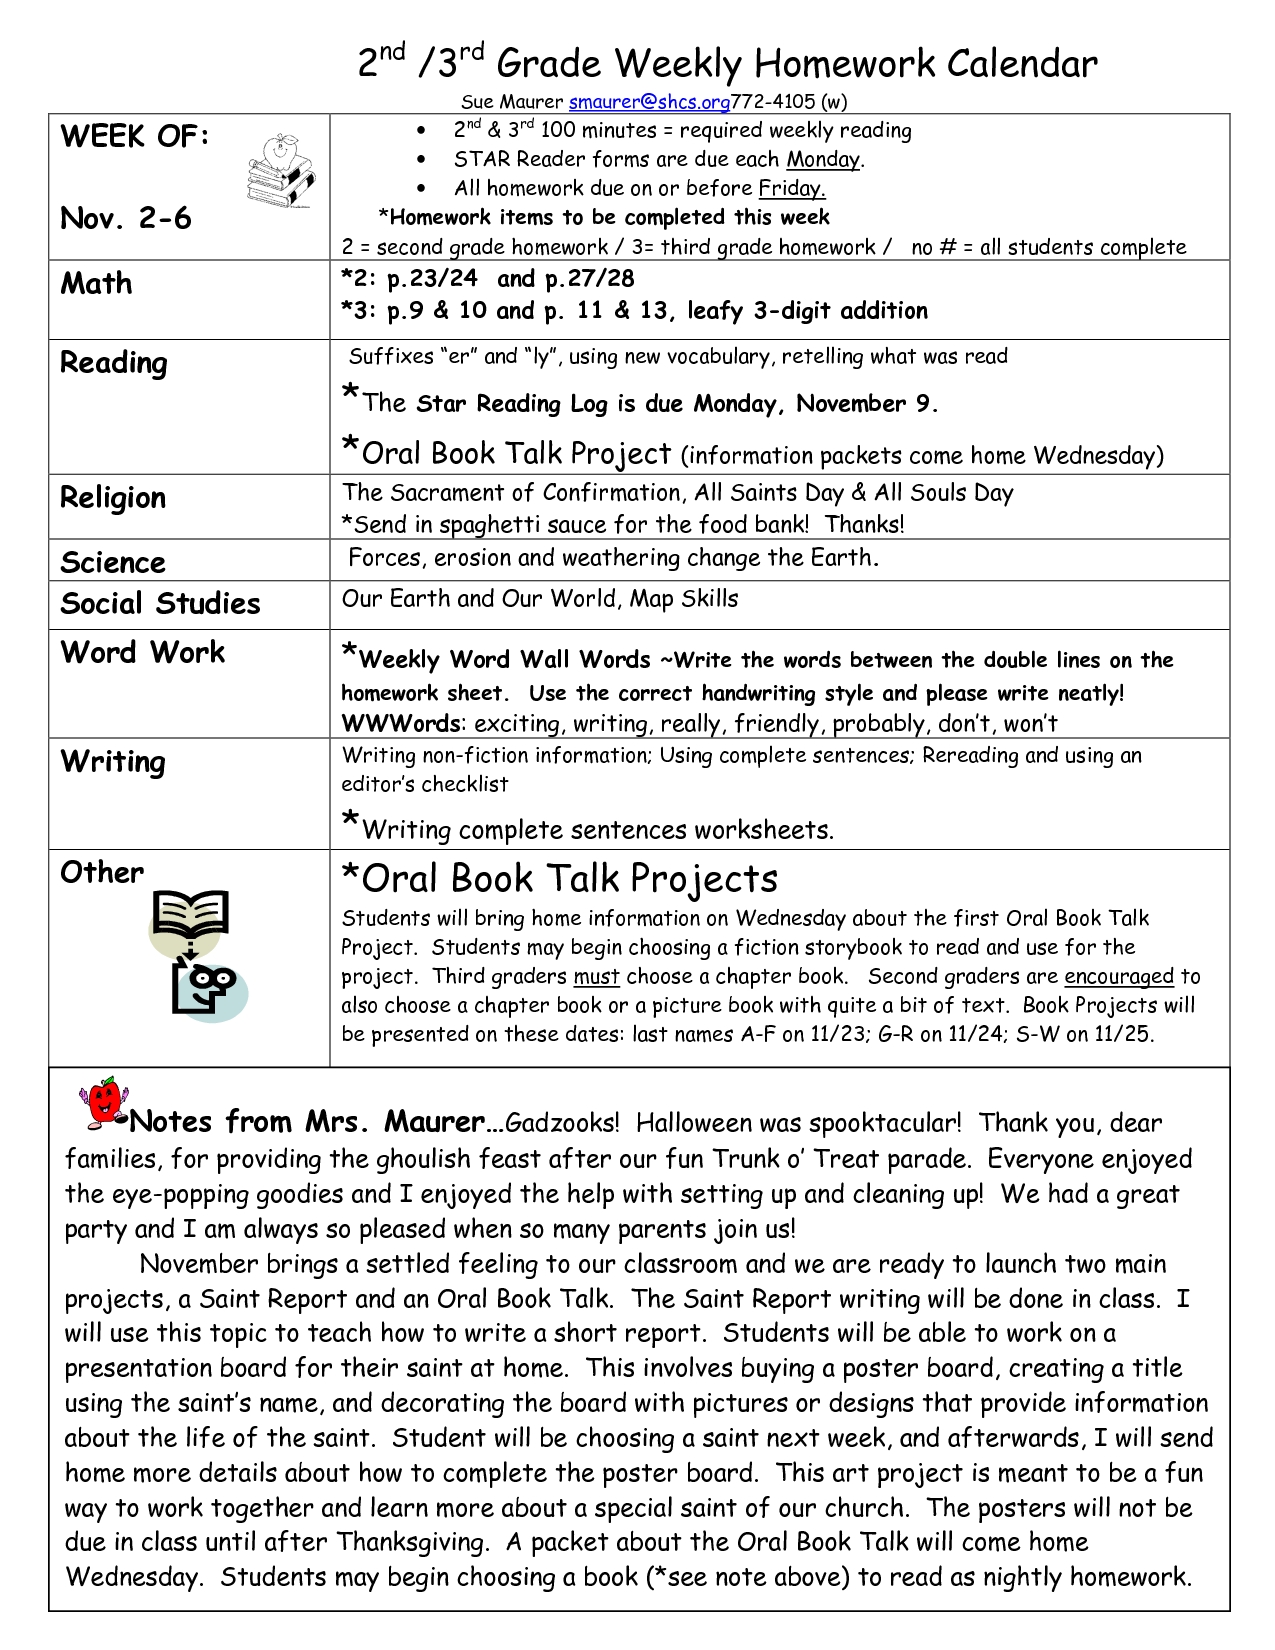 Reading Homework Template | Grade Weekly Homework Calendar Impressive Weekly Homework 3Rd Grade Calendar